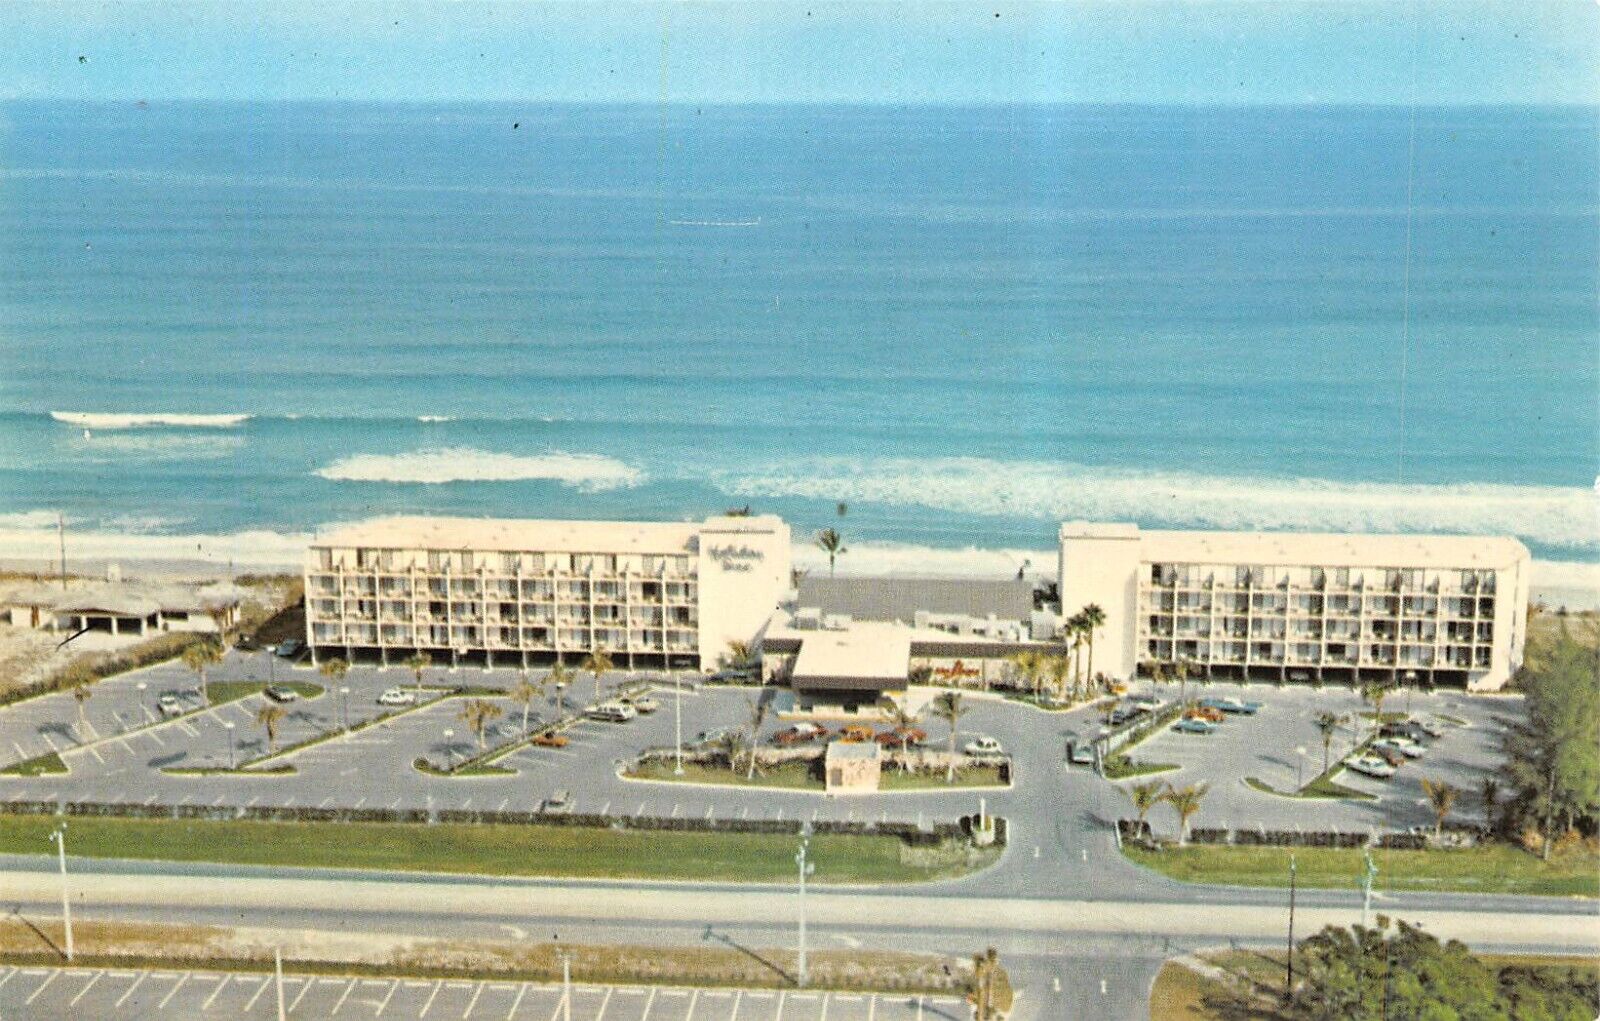 Holiday Inn Resort Jensen Beach Florida Aerial View Postcard 8468